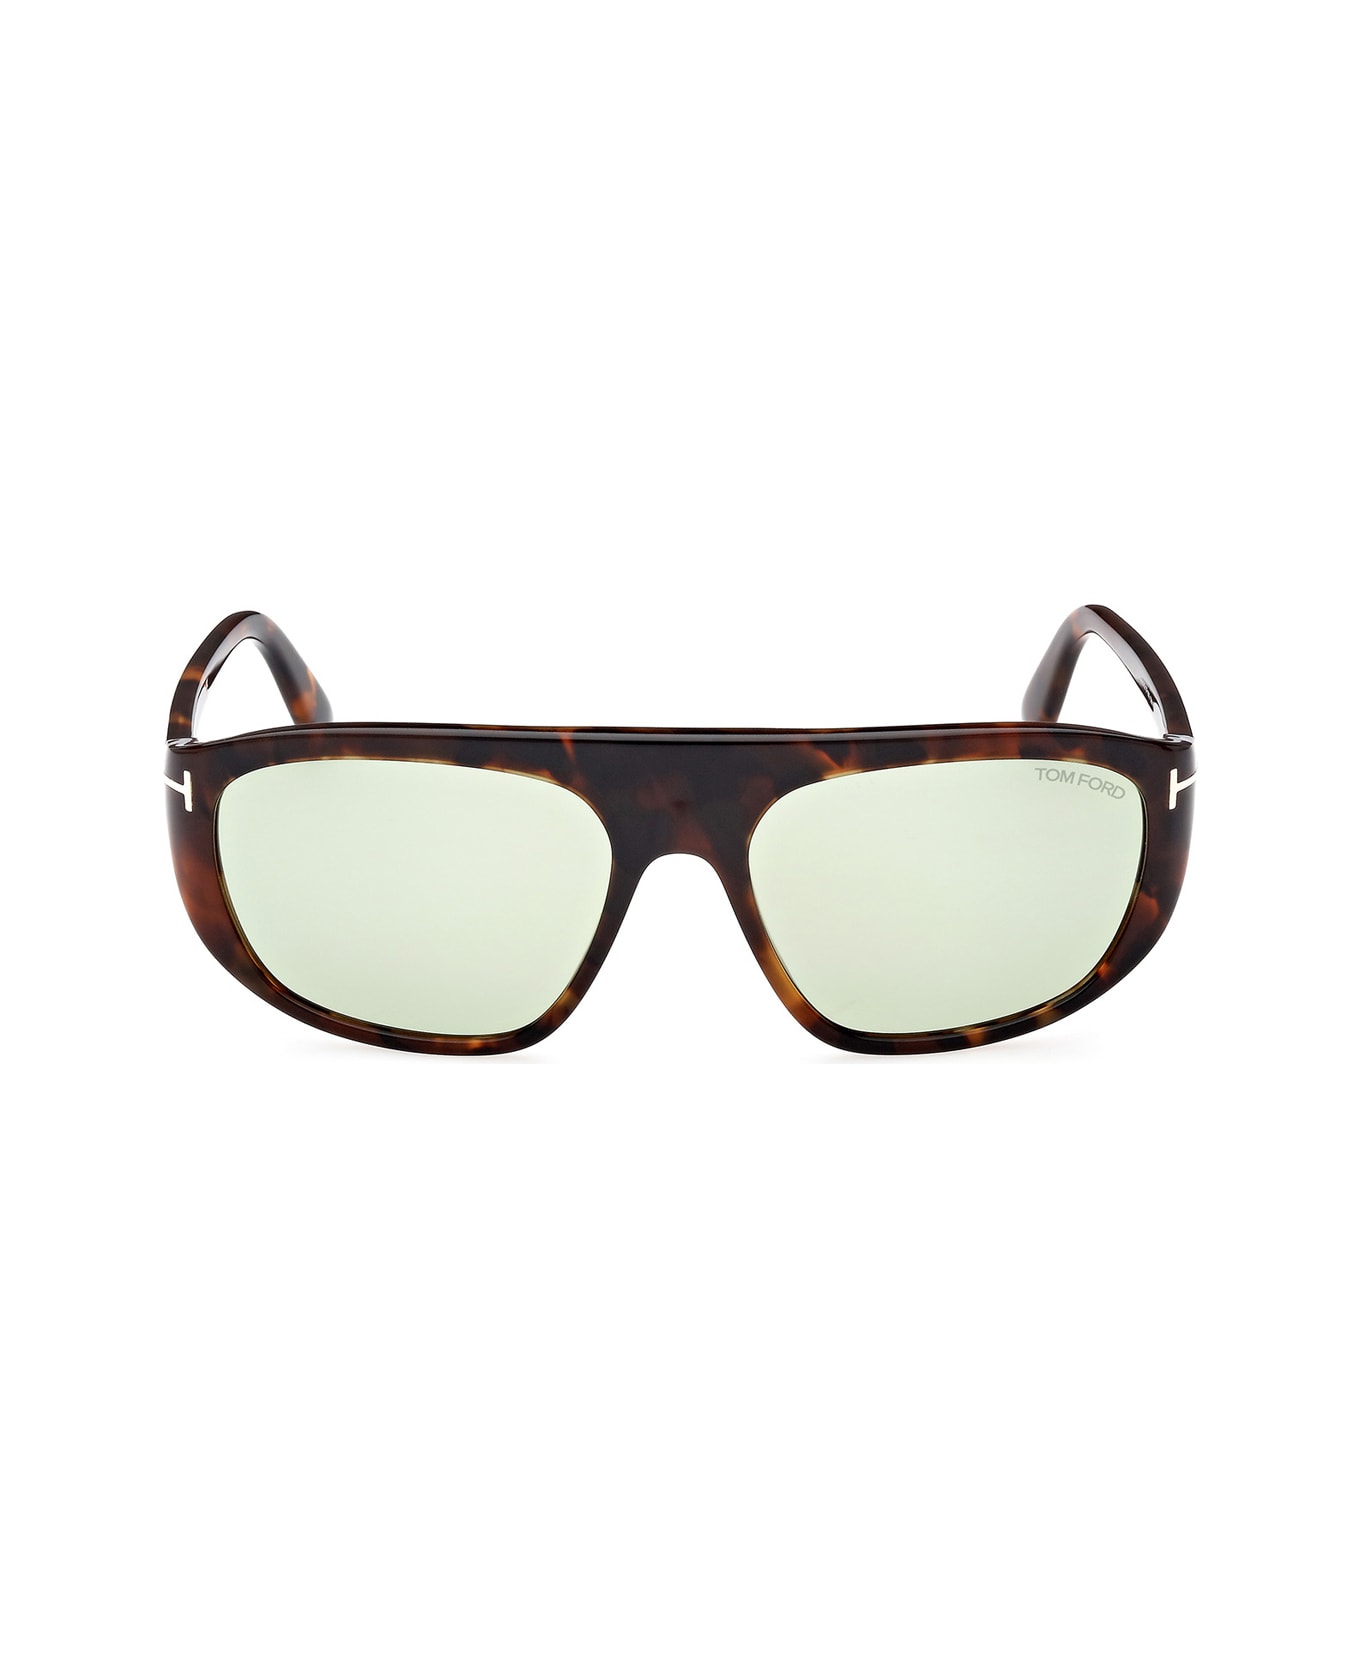 Tom Ford Eyewear Ft1002 Sunglasses - Marrone サングラス